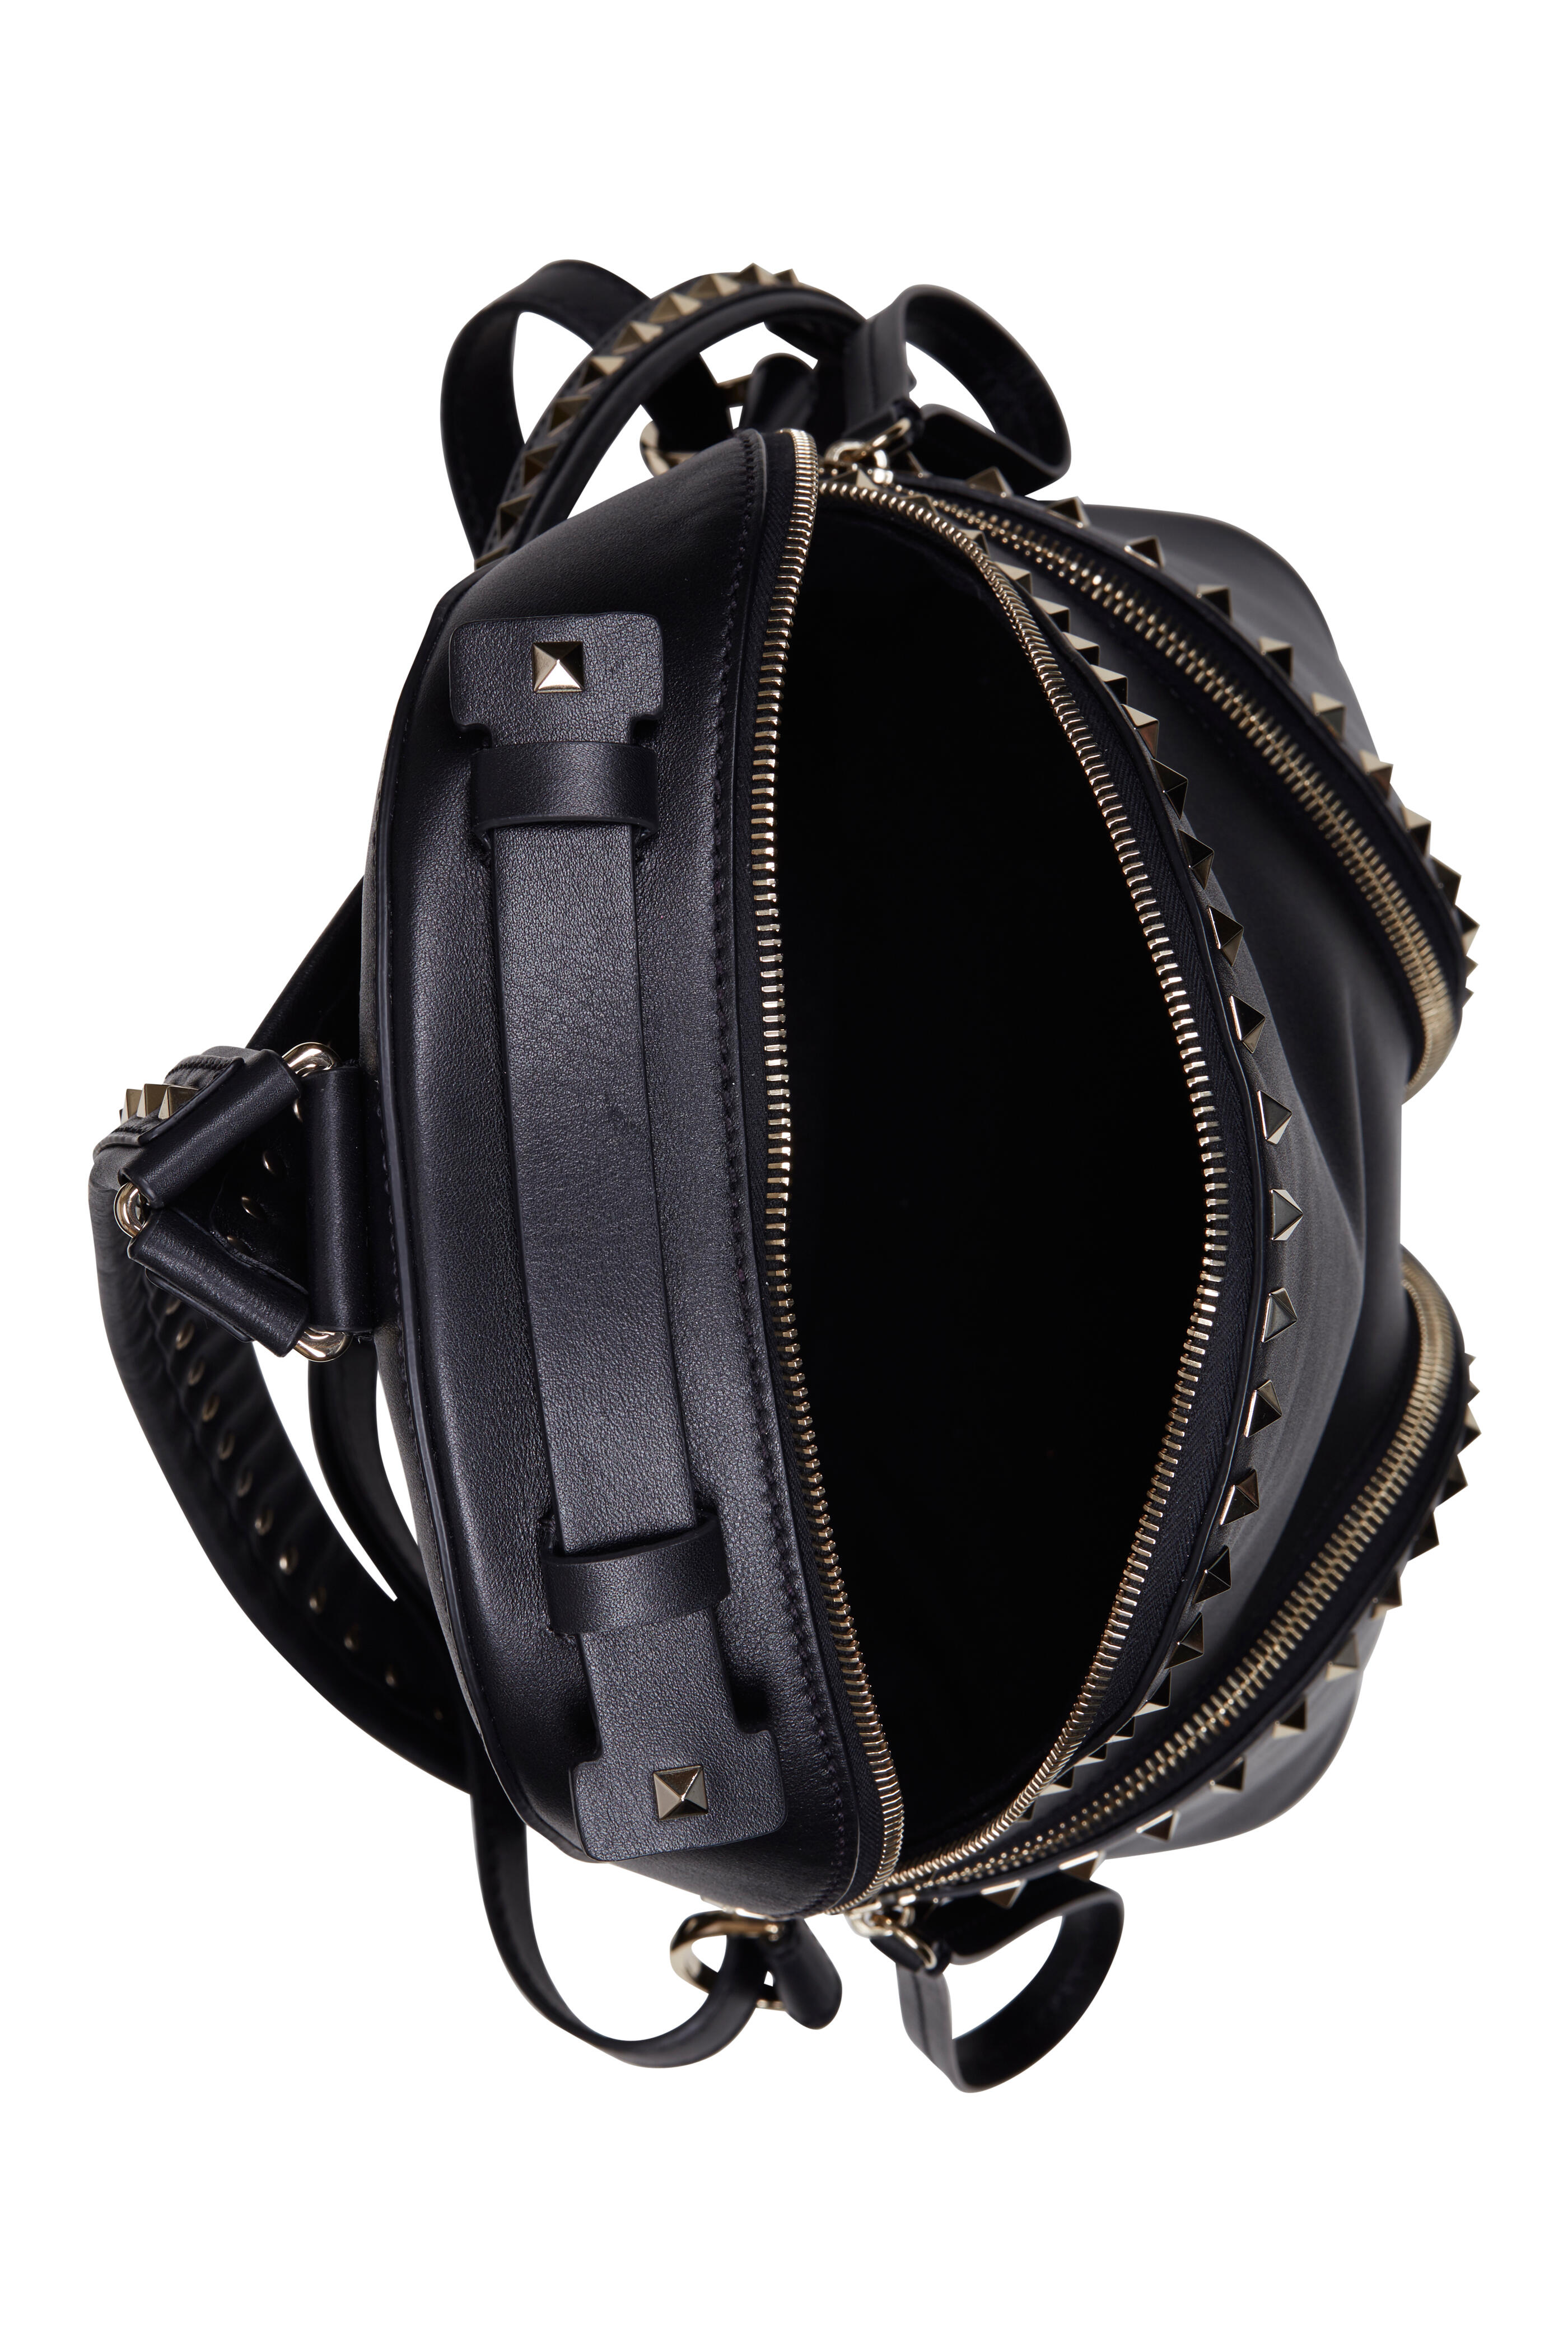 Valentino Black Leather Rockstud Backpack Valentino